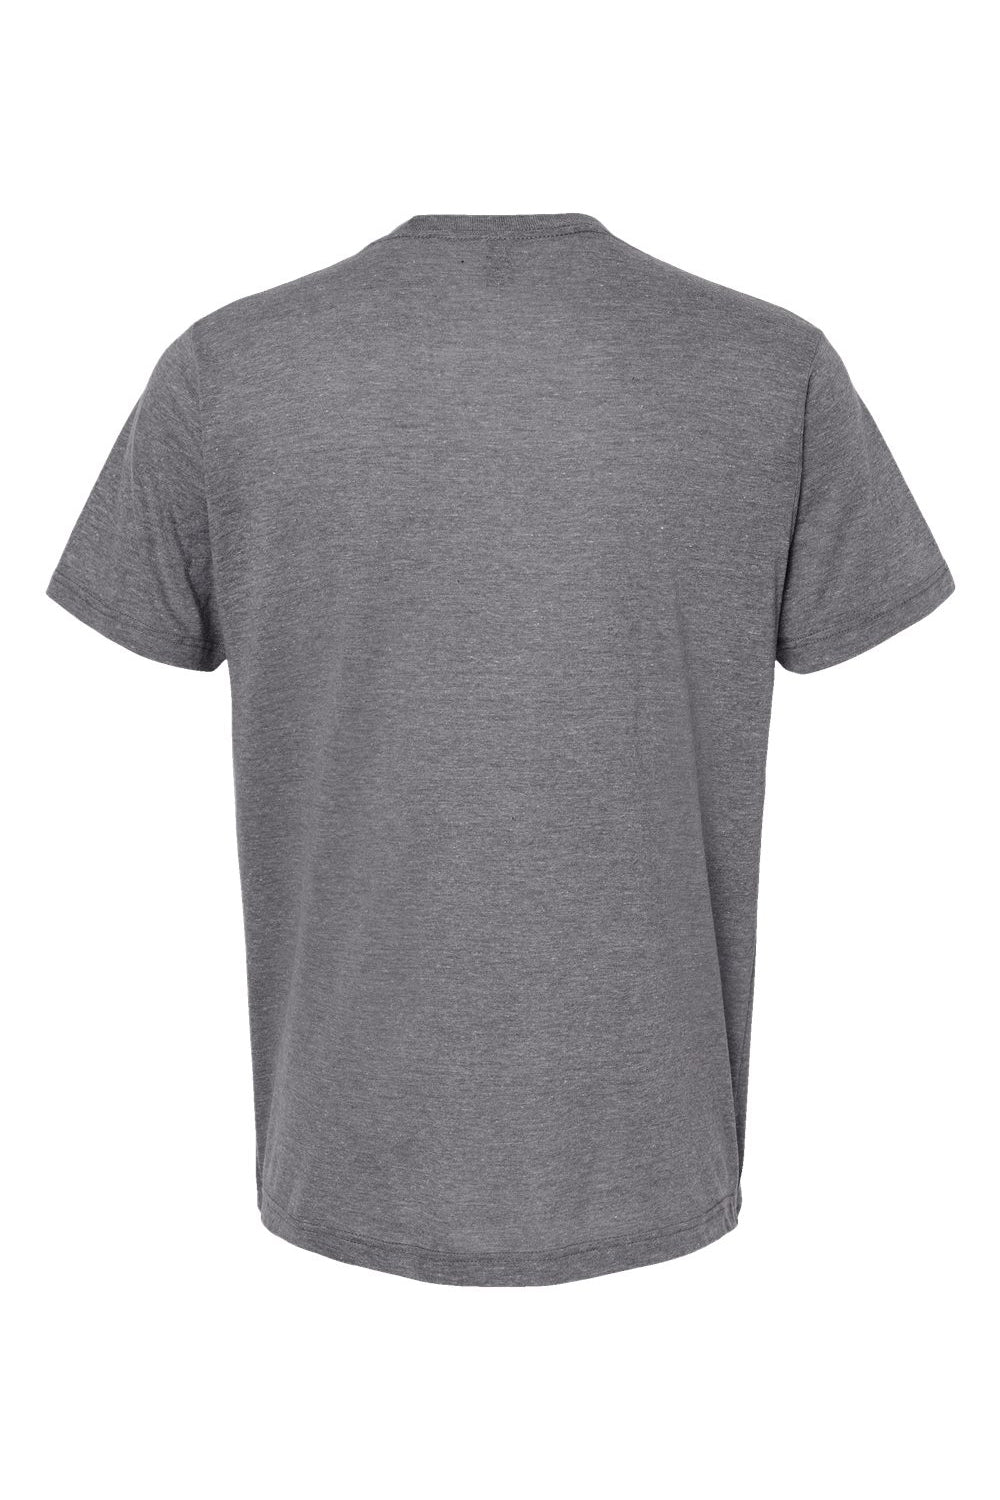 Tultex 254 Mens Short Sleeve Crewneck T-Shirt Heather Grey Flat Back